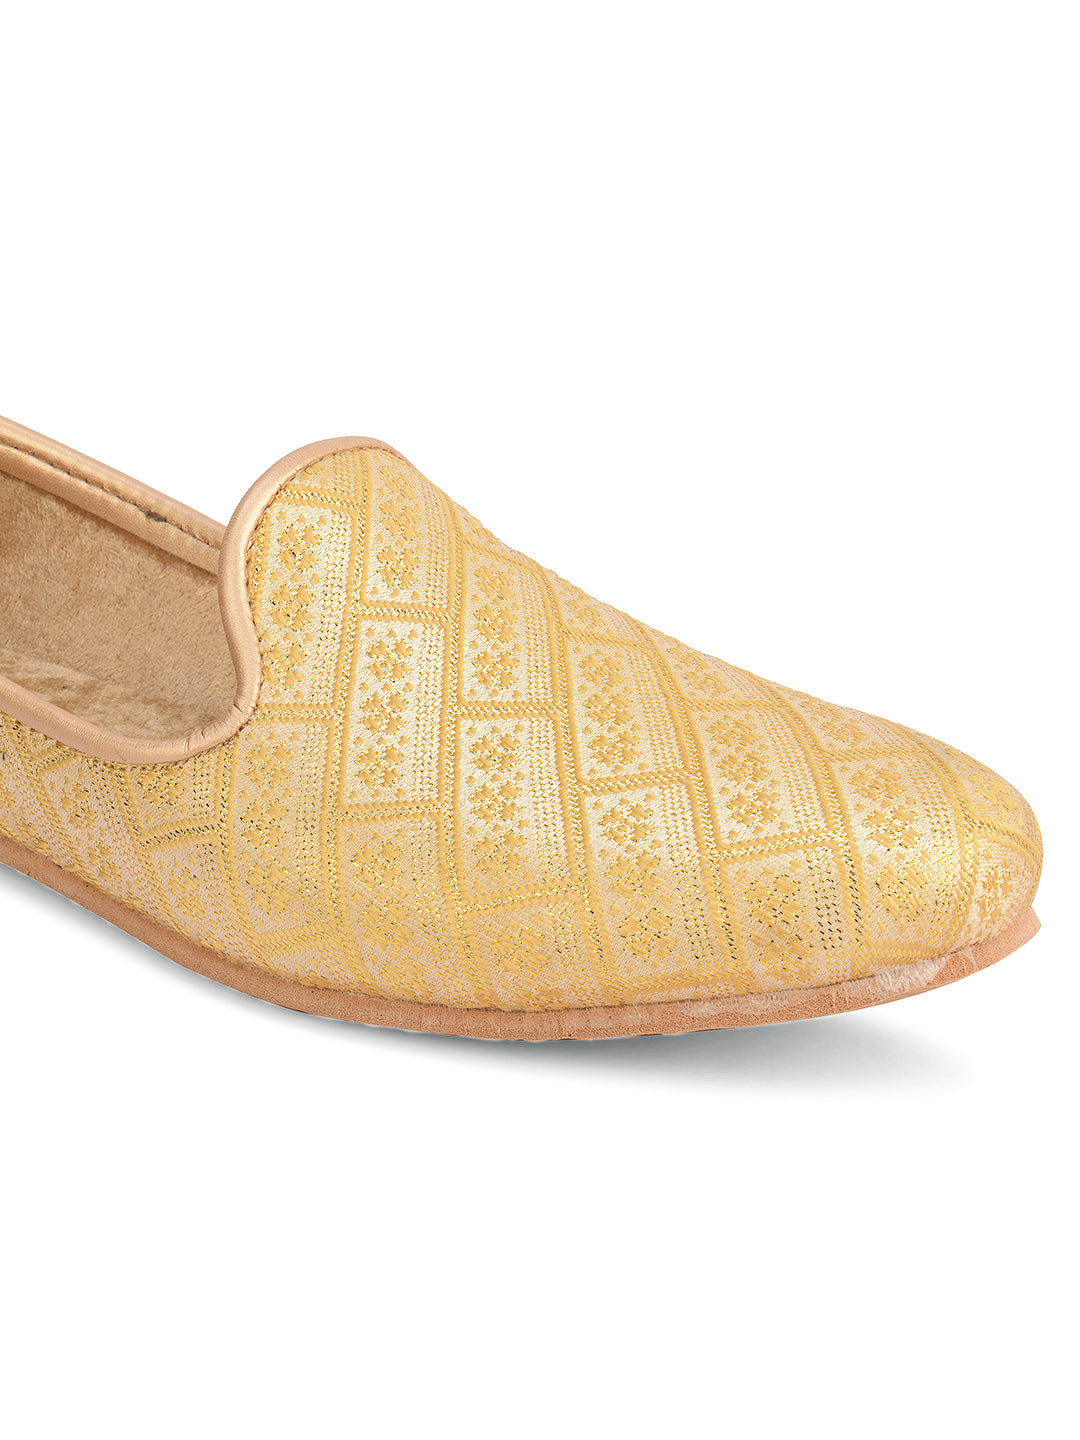 DESI COLOUR Mens Gold Ethnic Footwear/Punjabi Jutti